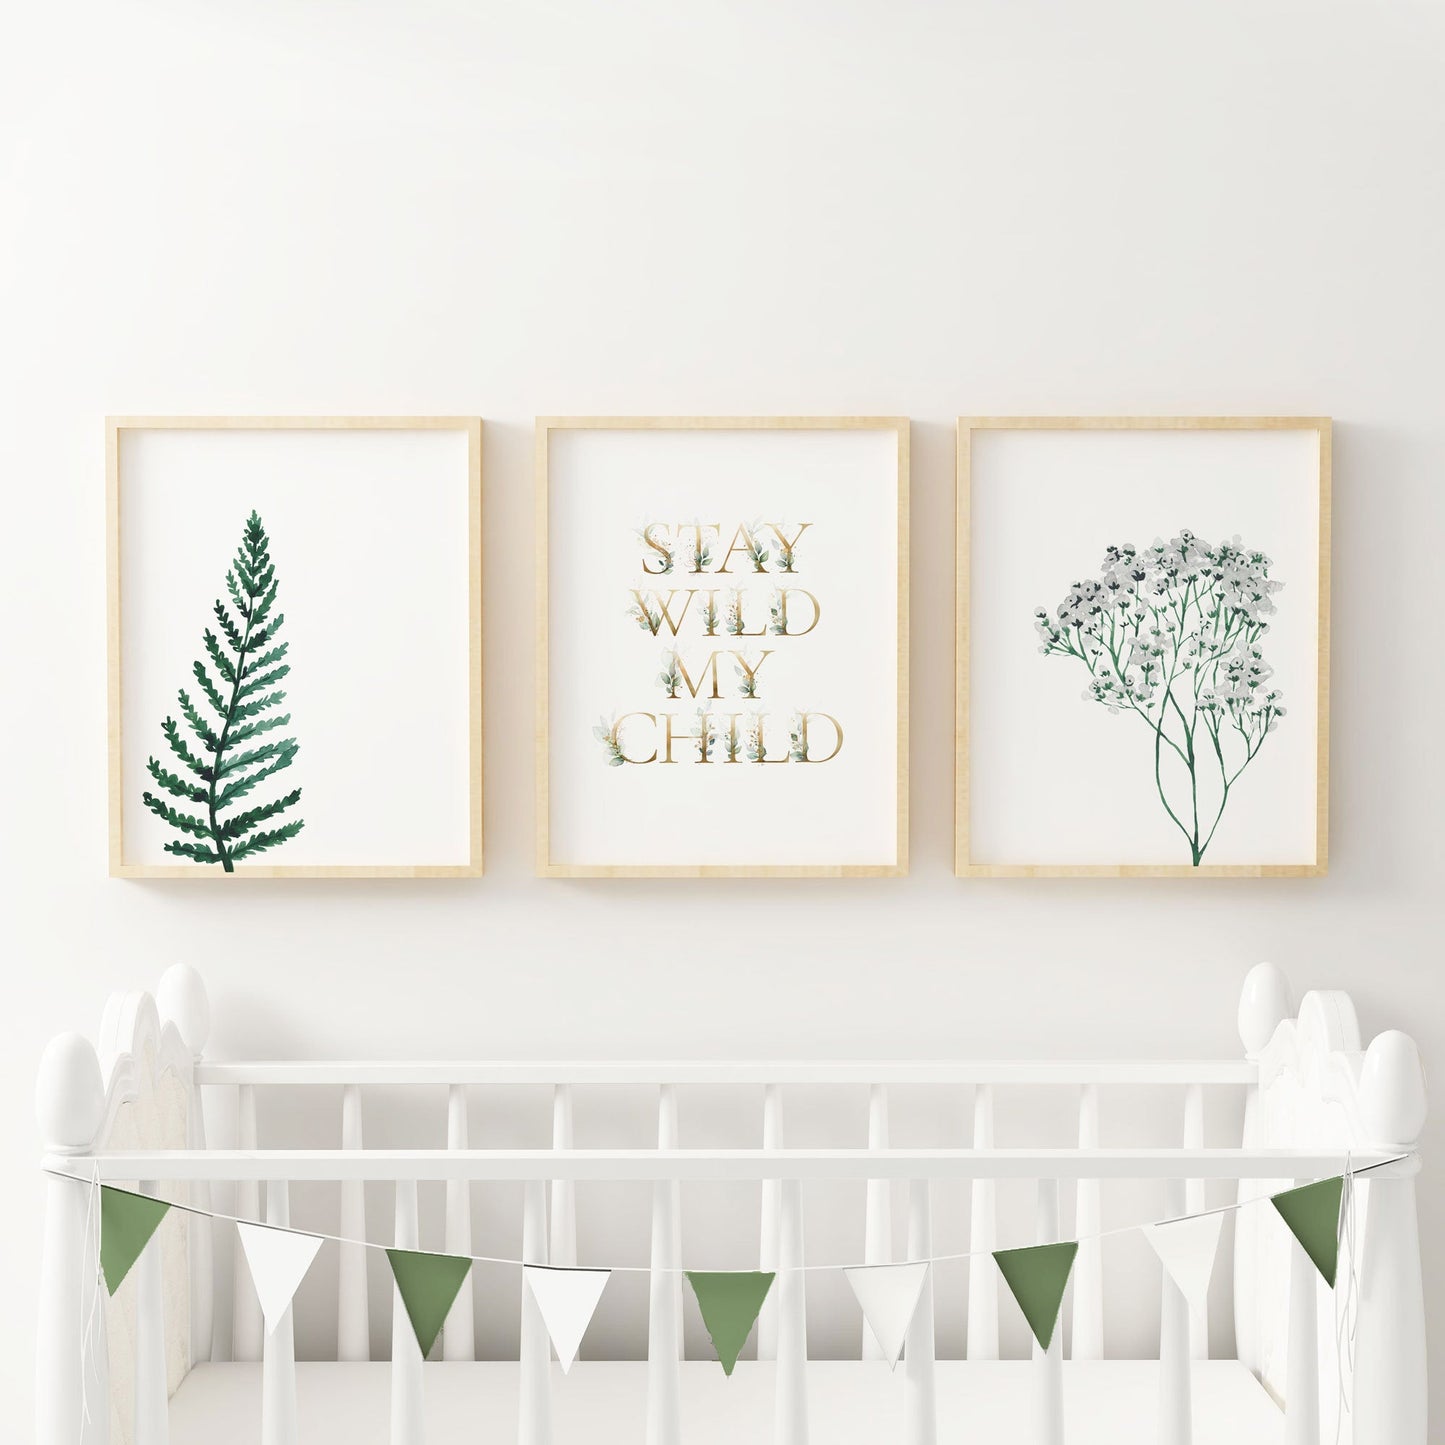 Stay Wild My Child Wall Art - Set of Three Prints